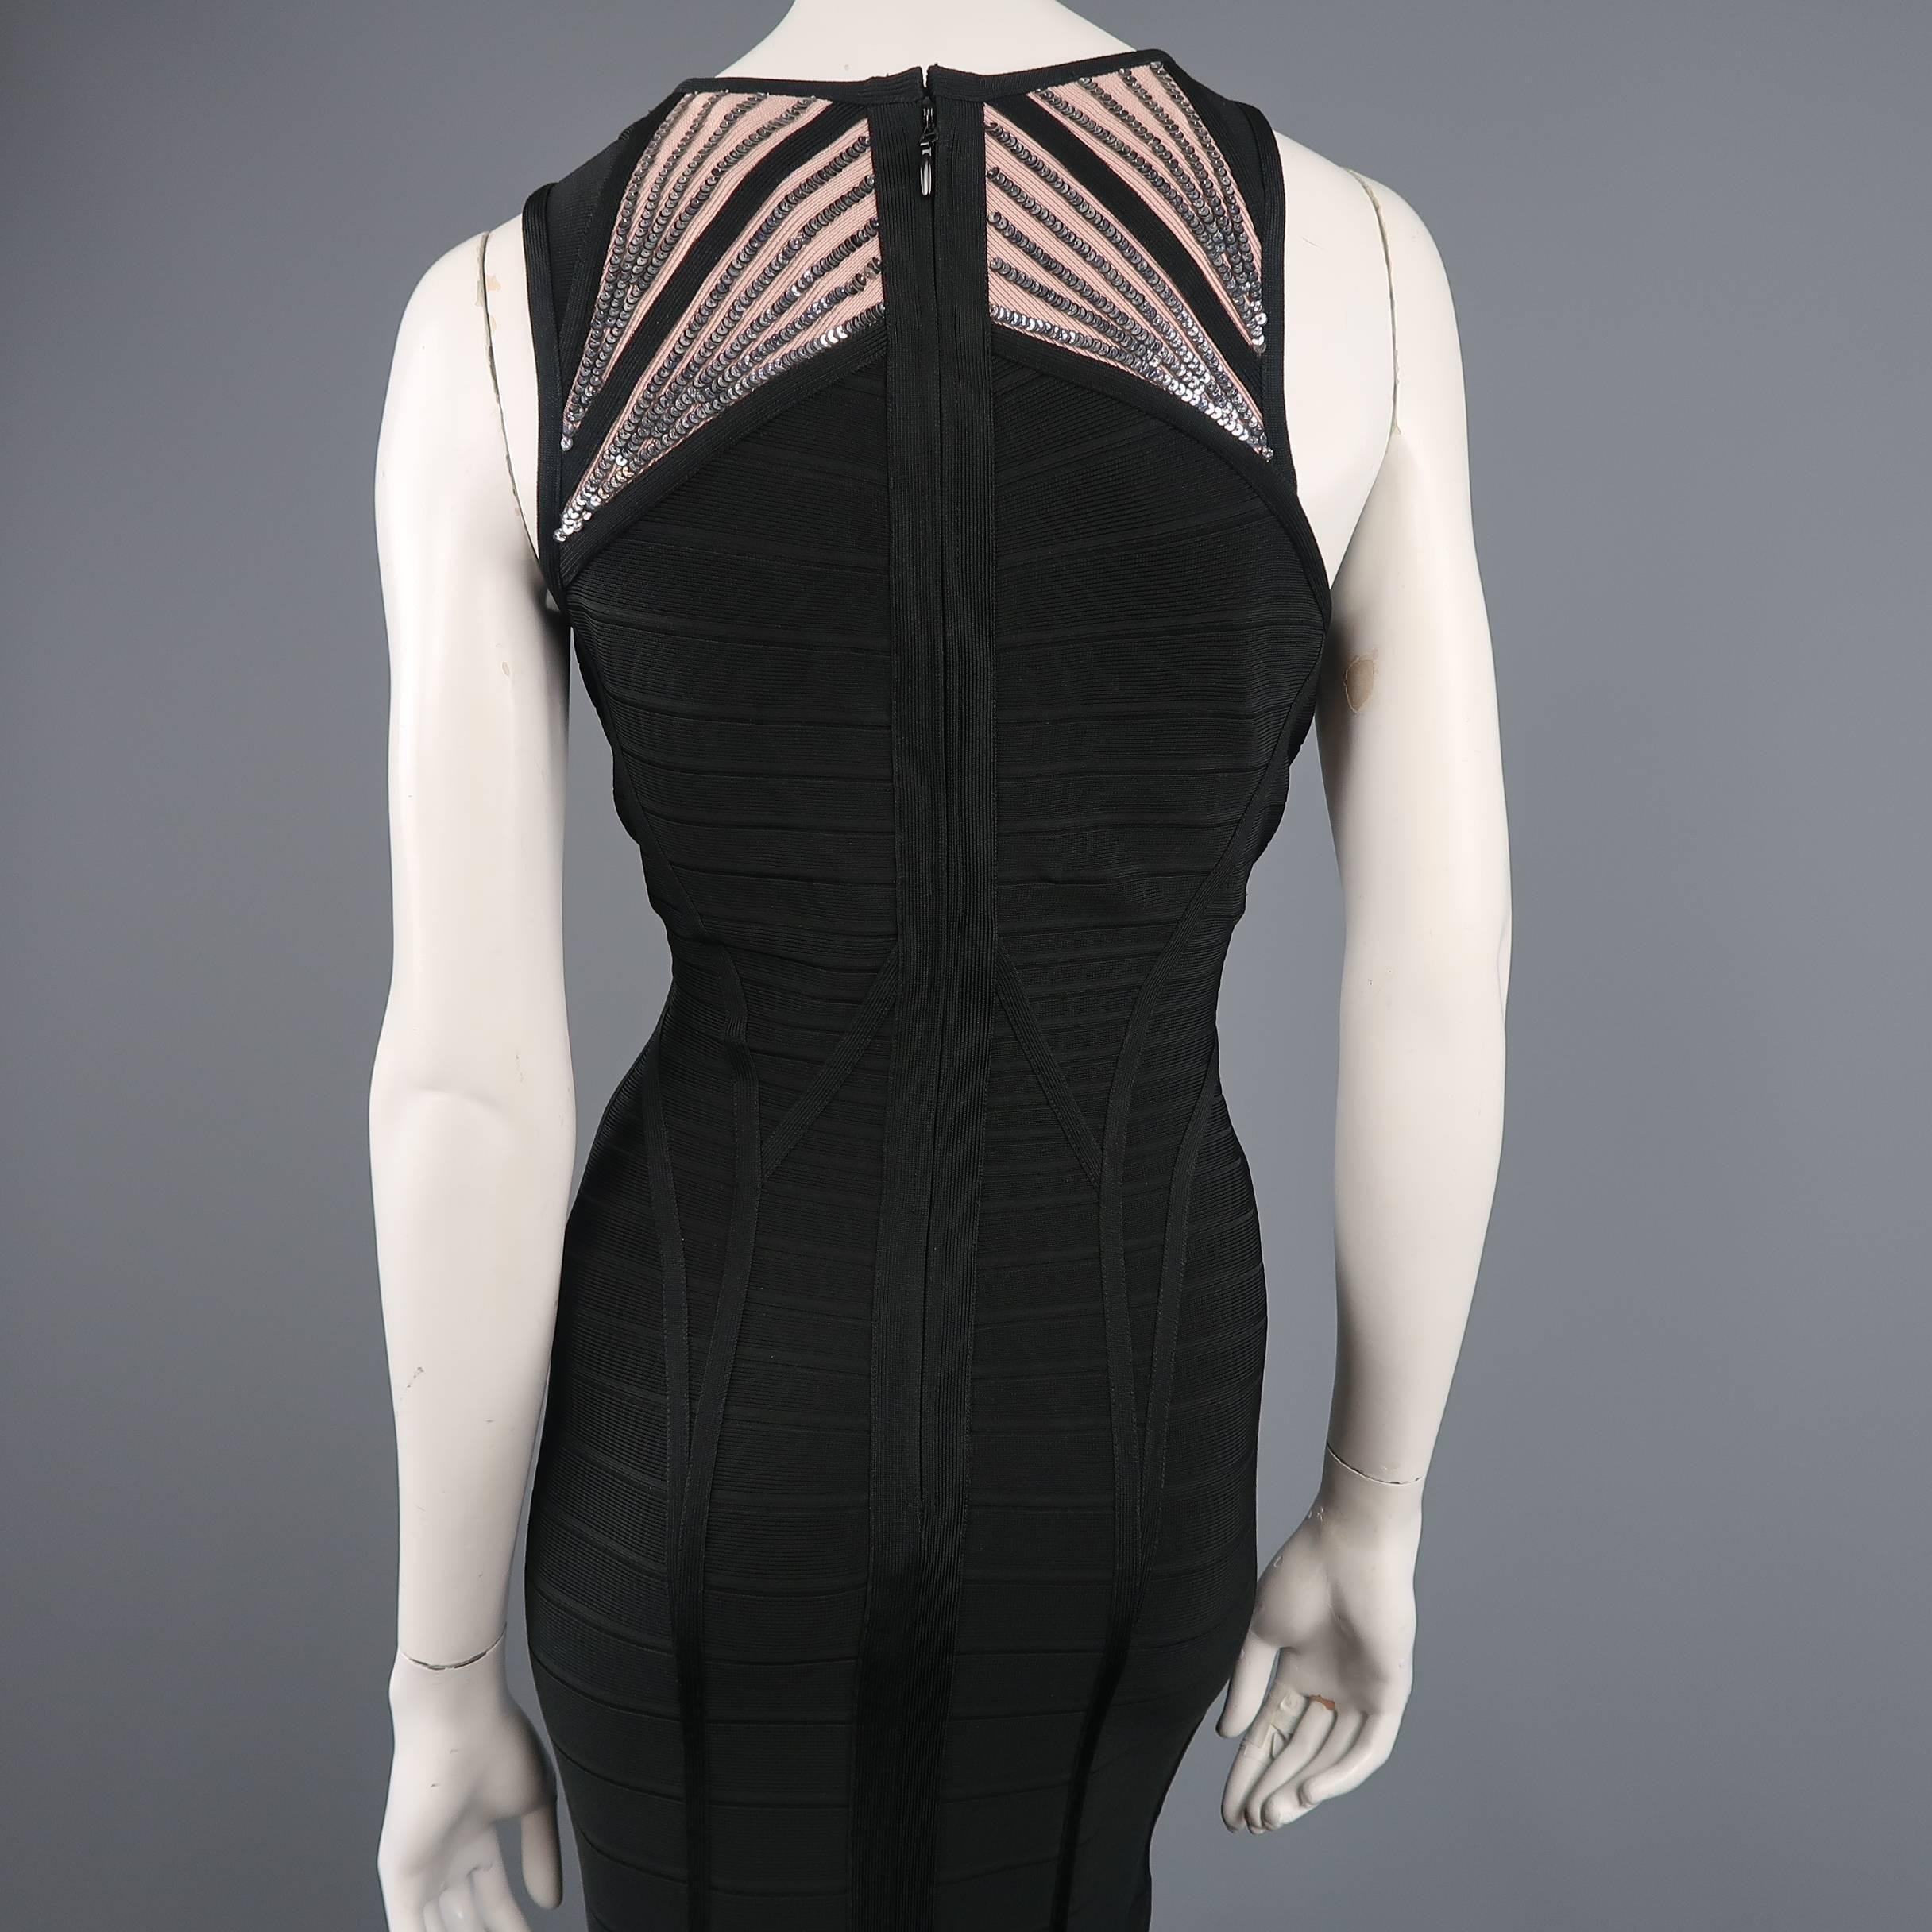 HERVE LEGER Size M Black & Beige Sequin Panel Strapless HALE Bandage Gown 5